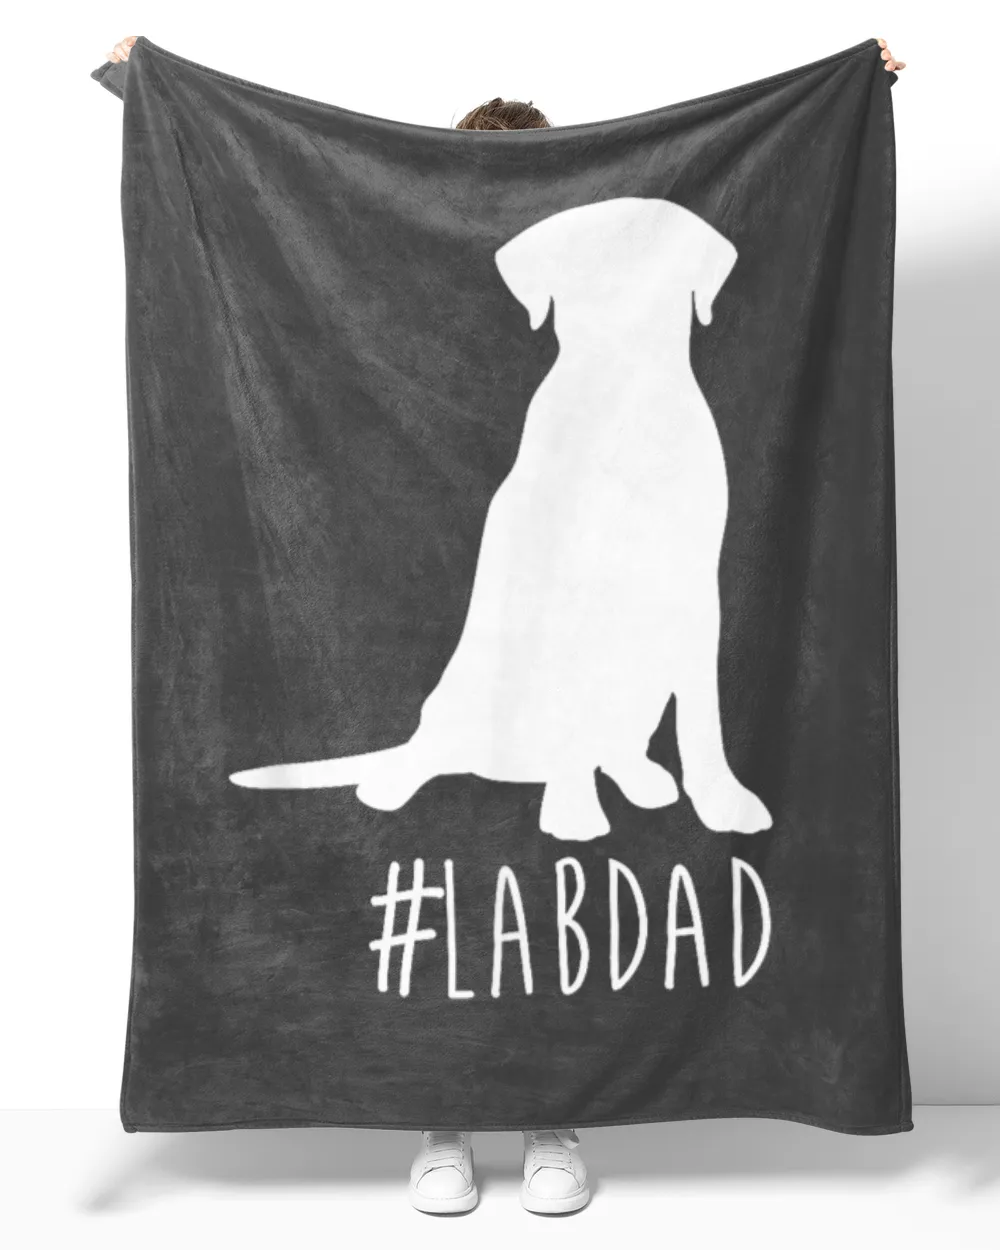 Hashtag Lab Dad T-Shirt. Labrador Retriever Dad